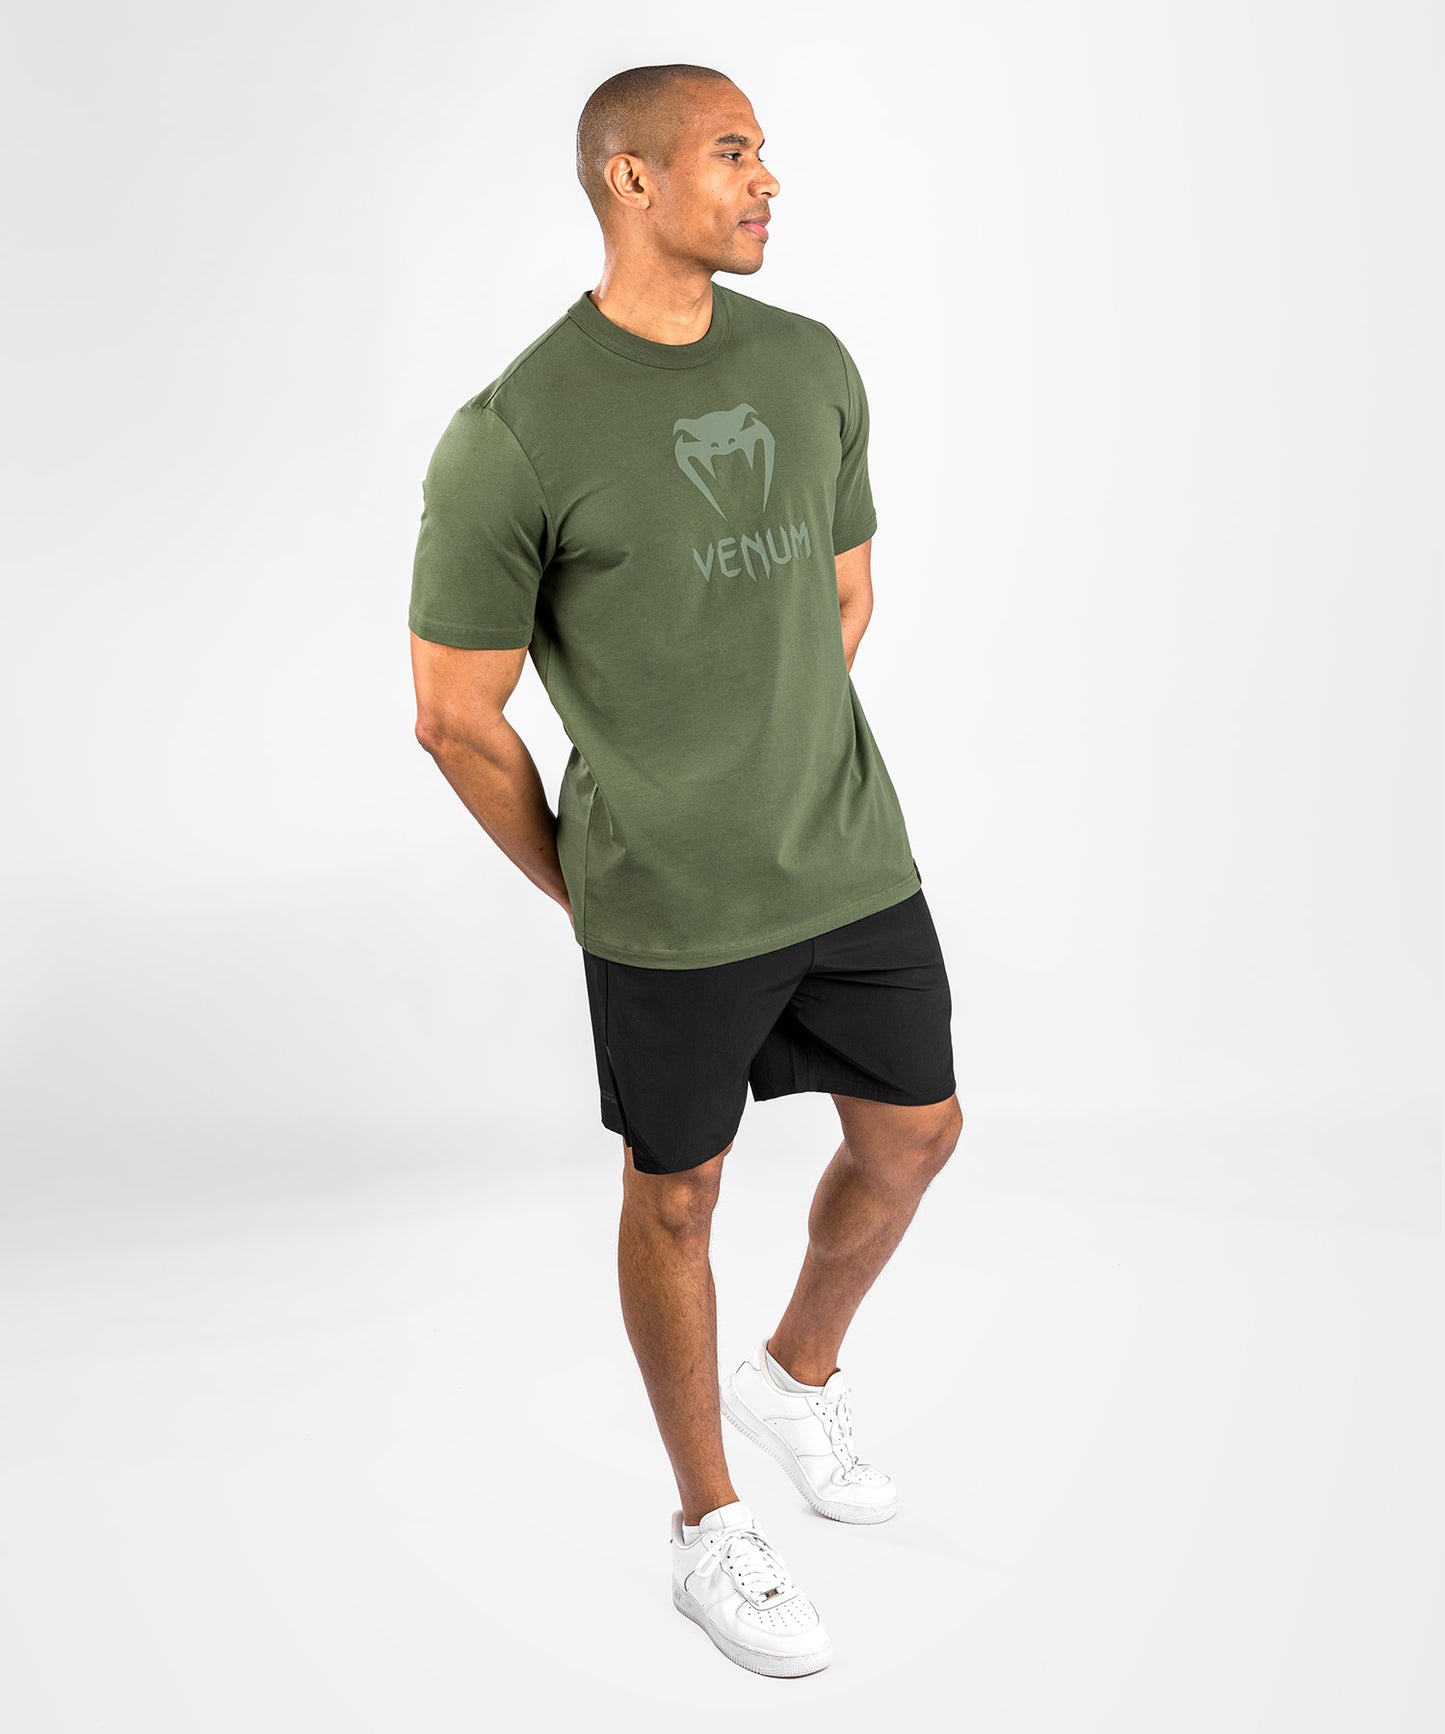 Venum Classic T-Shirt - Green/Green